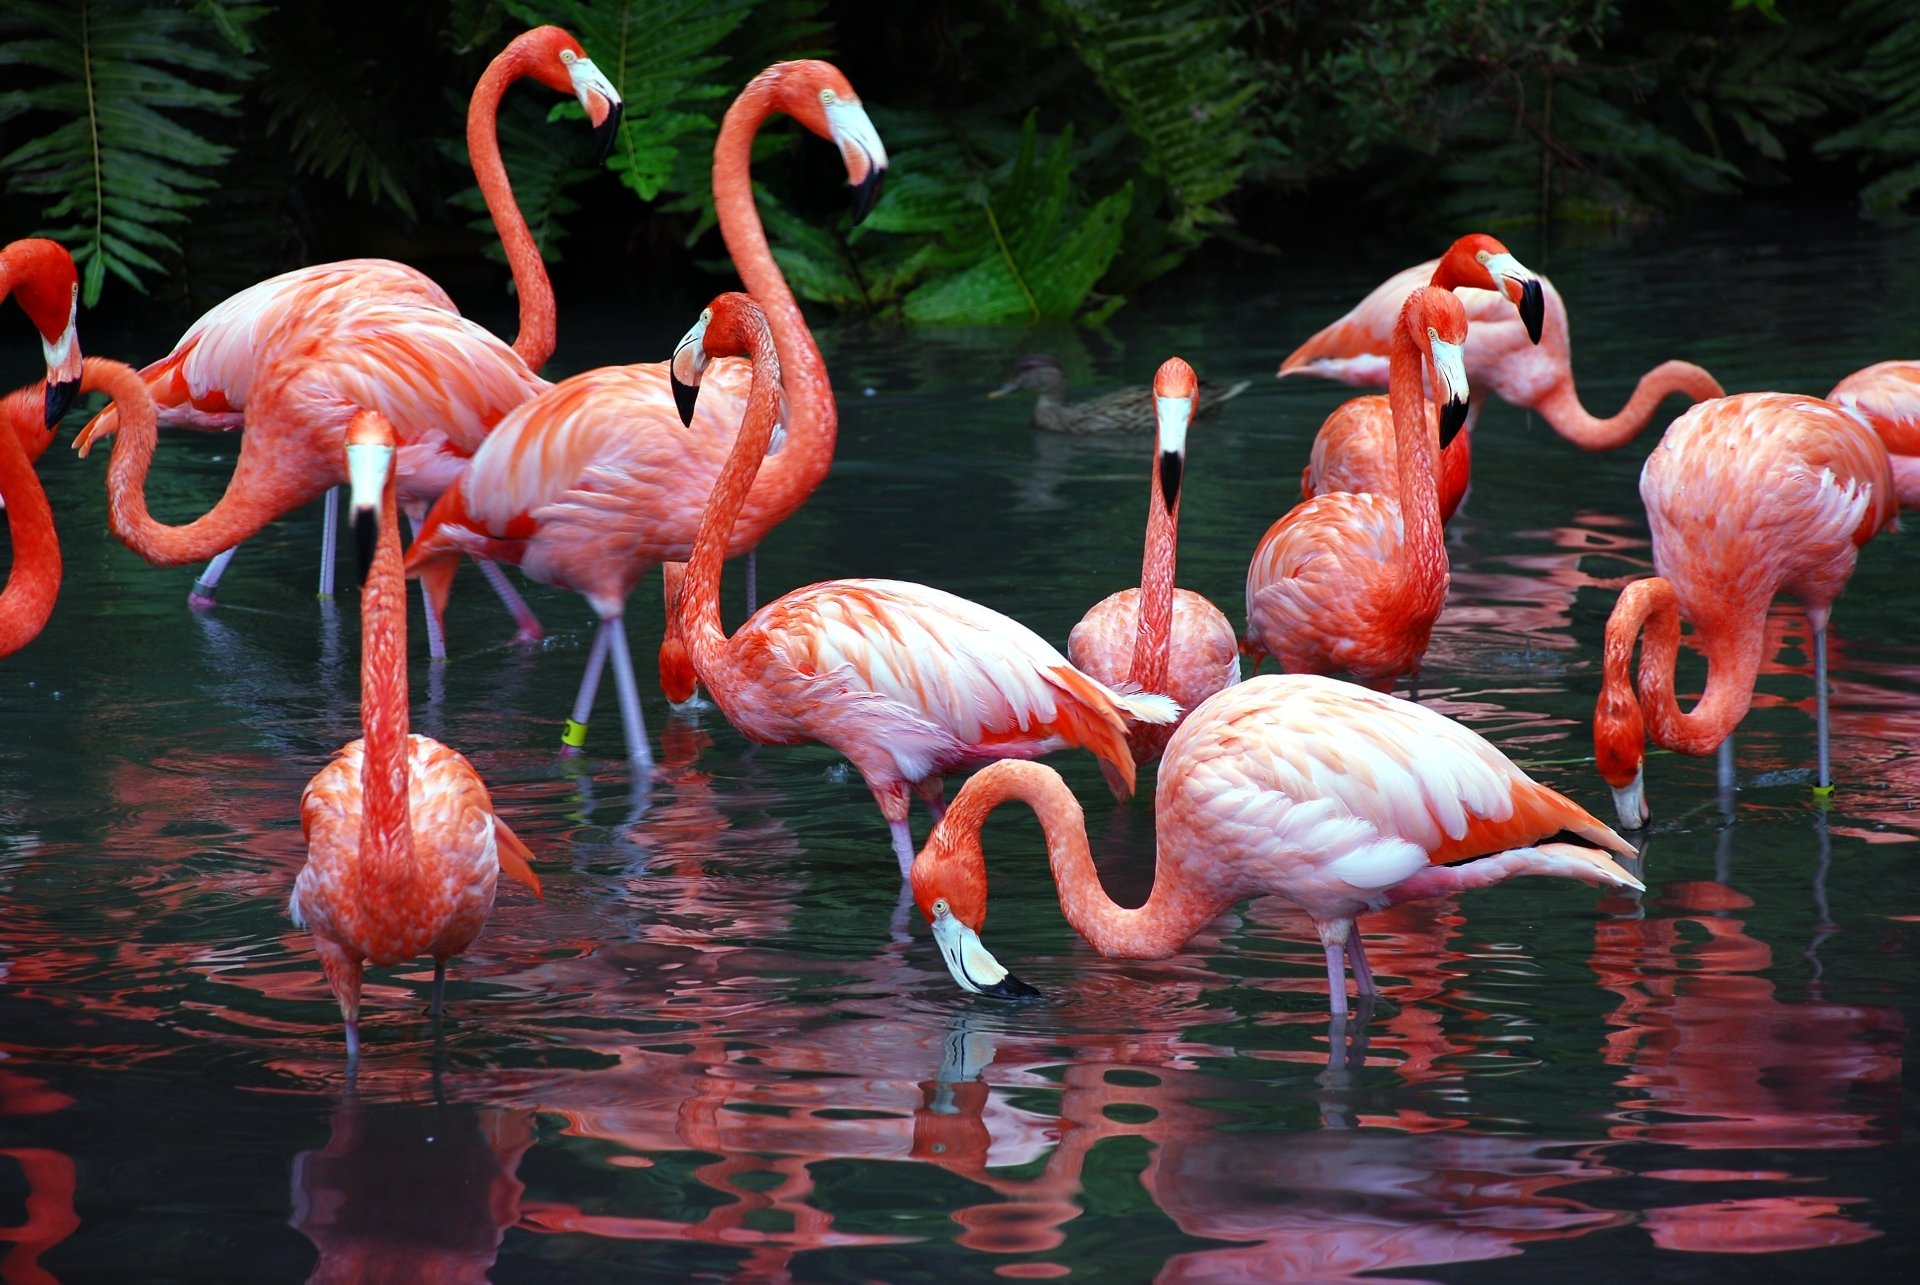 Flamingo Phone Wallpapers